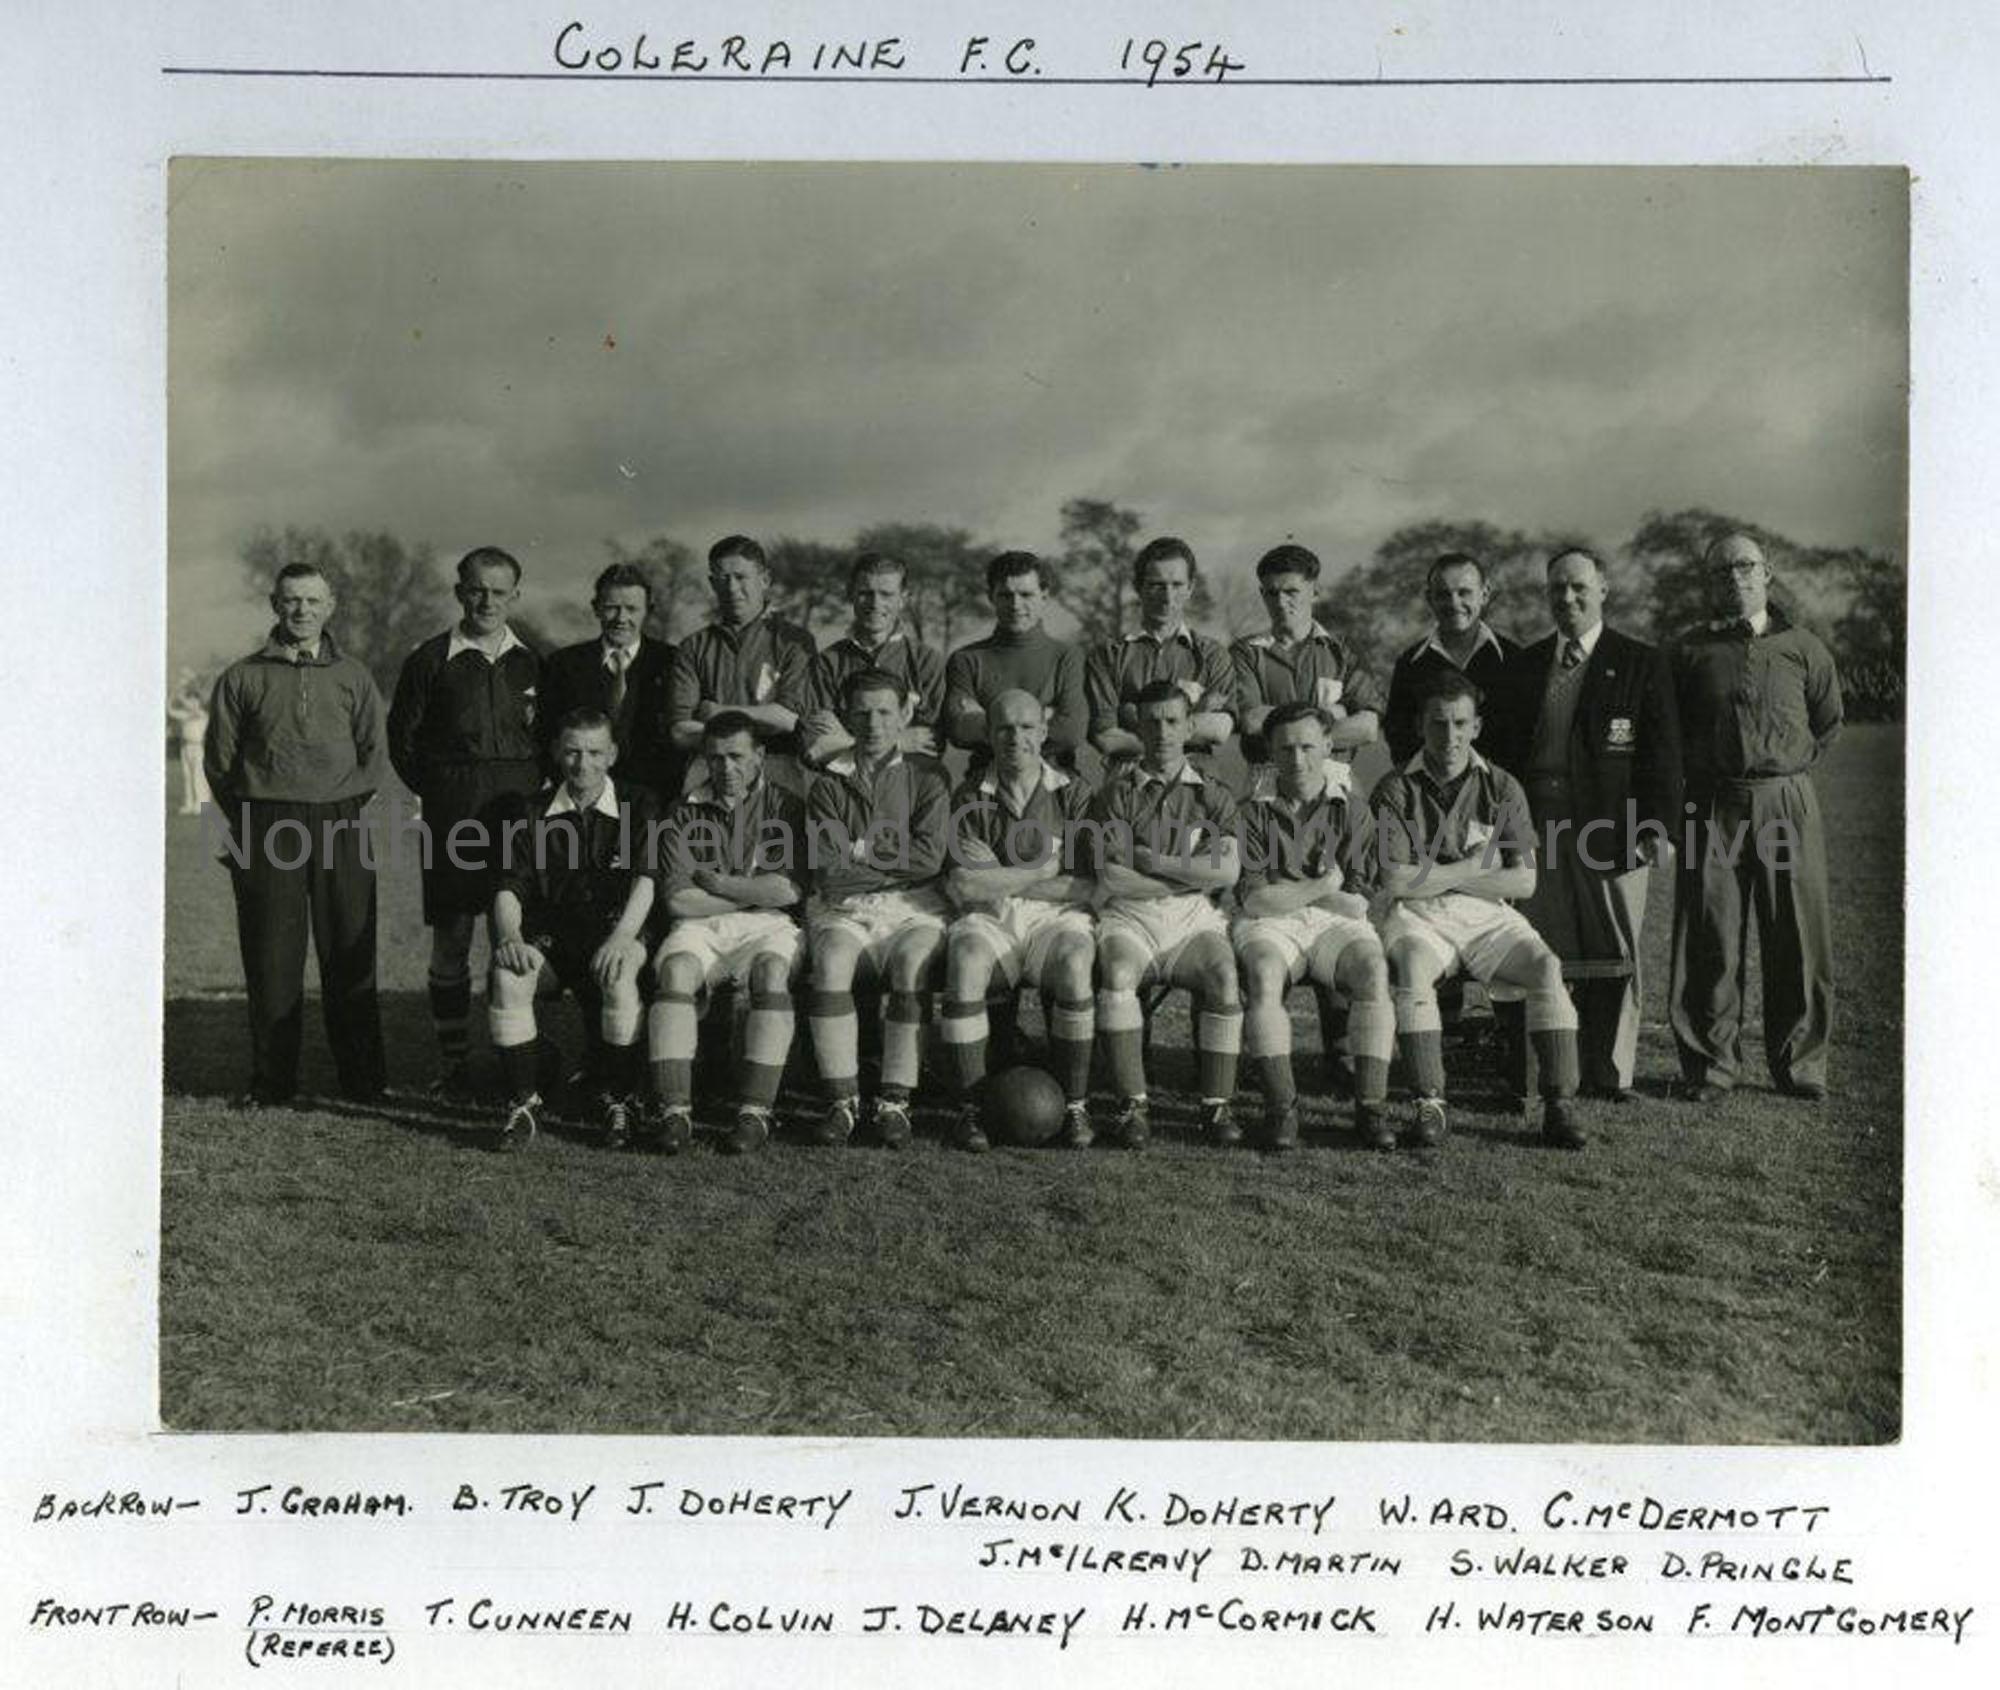 Coleraine Football Club 1954